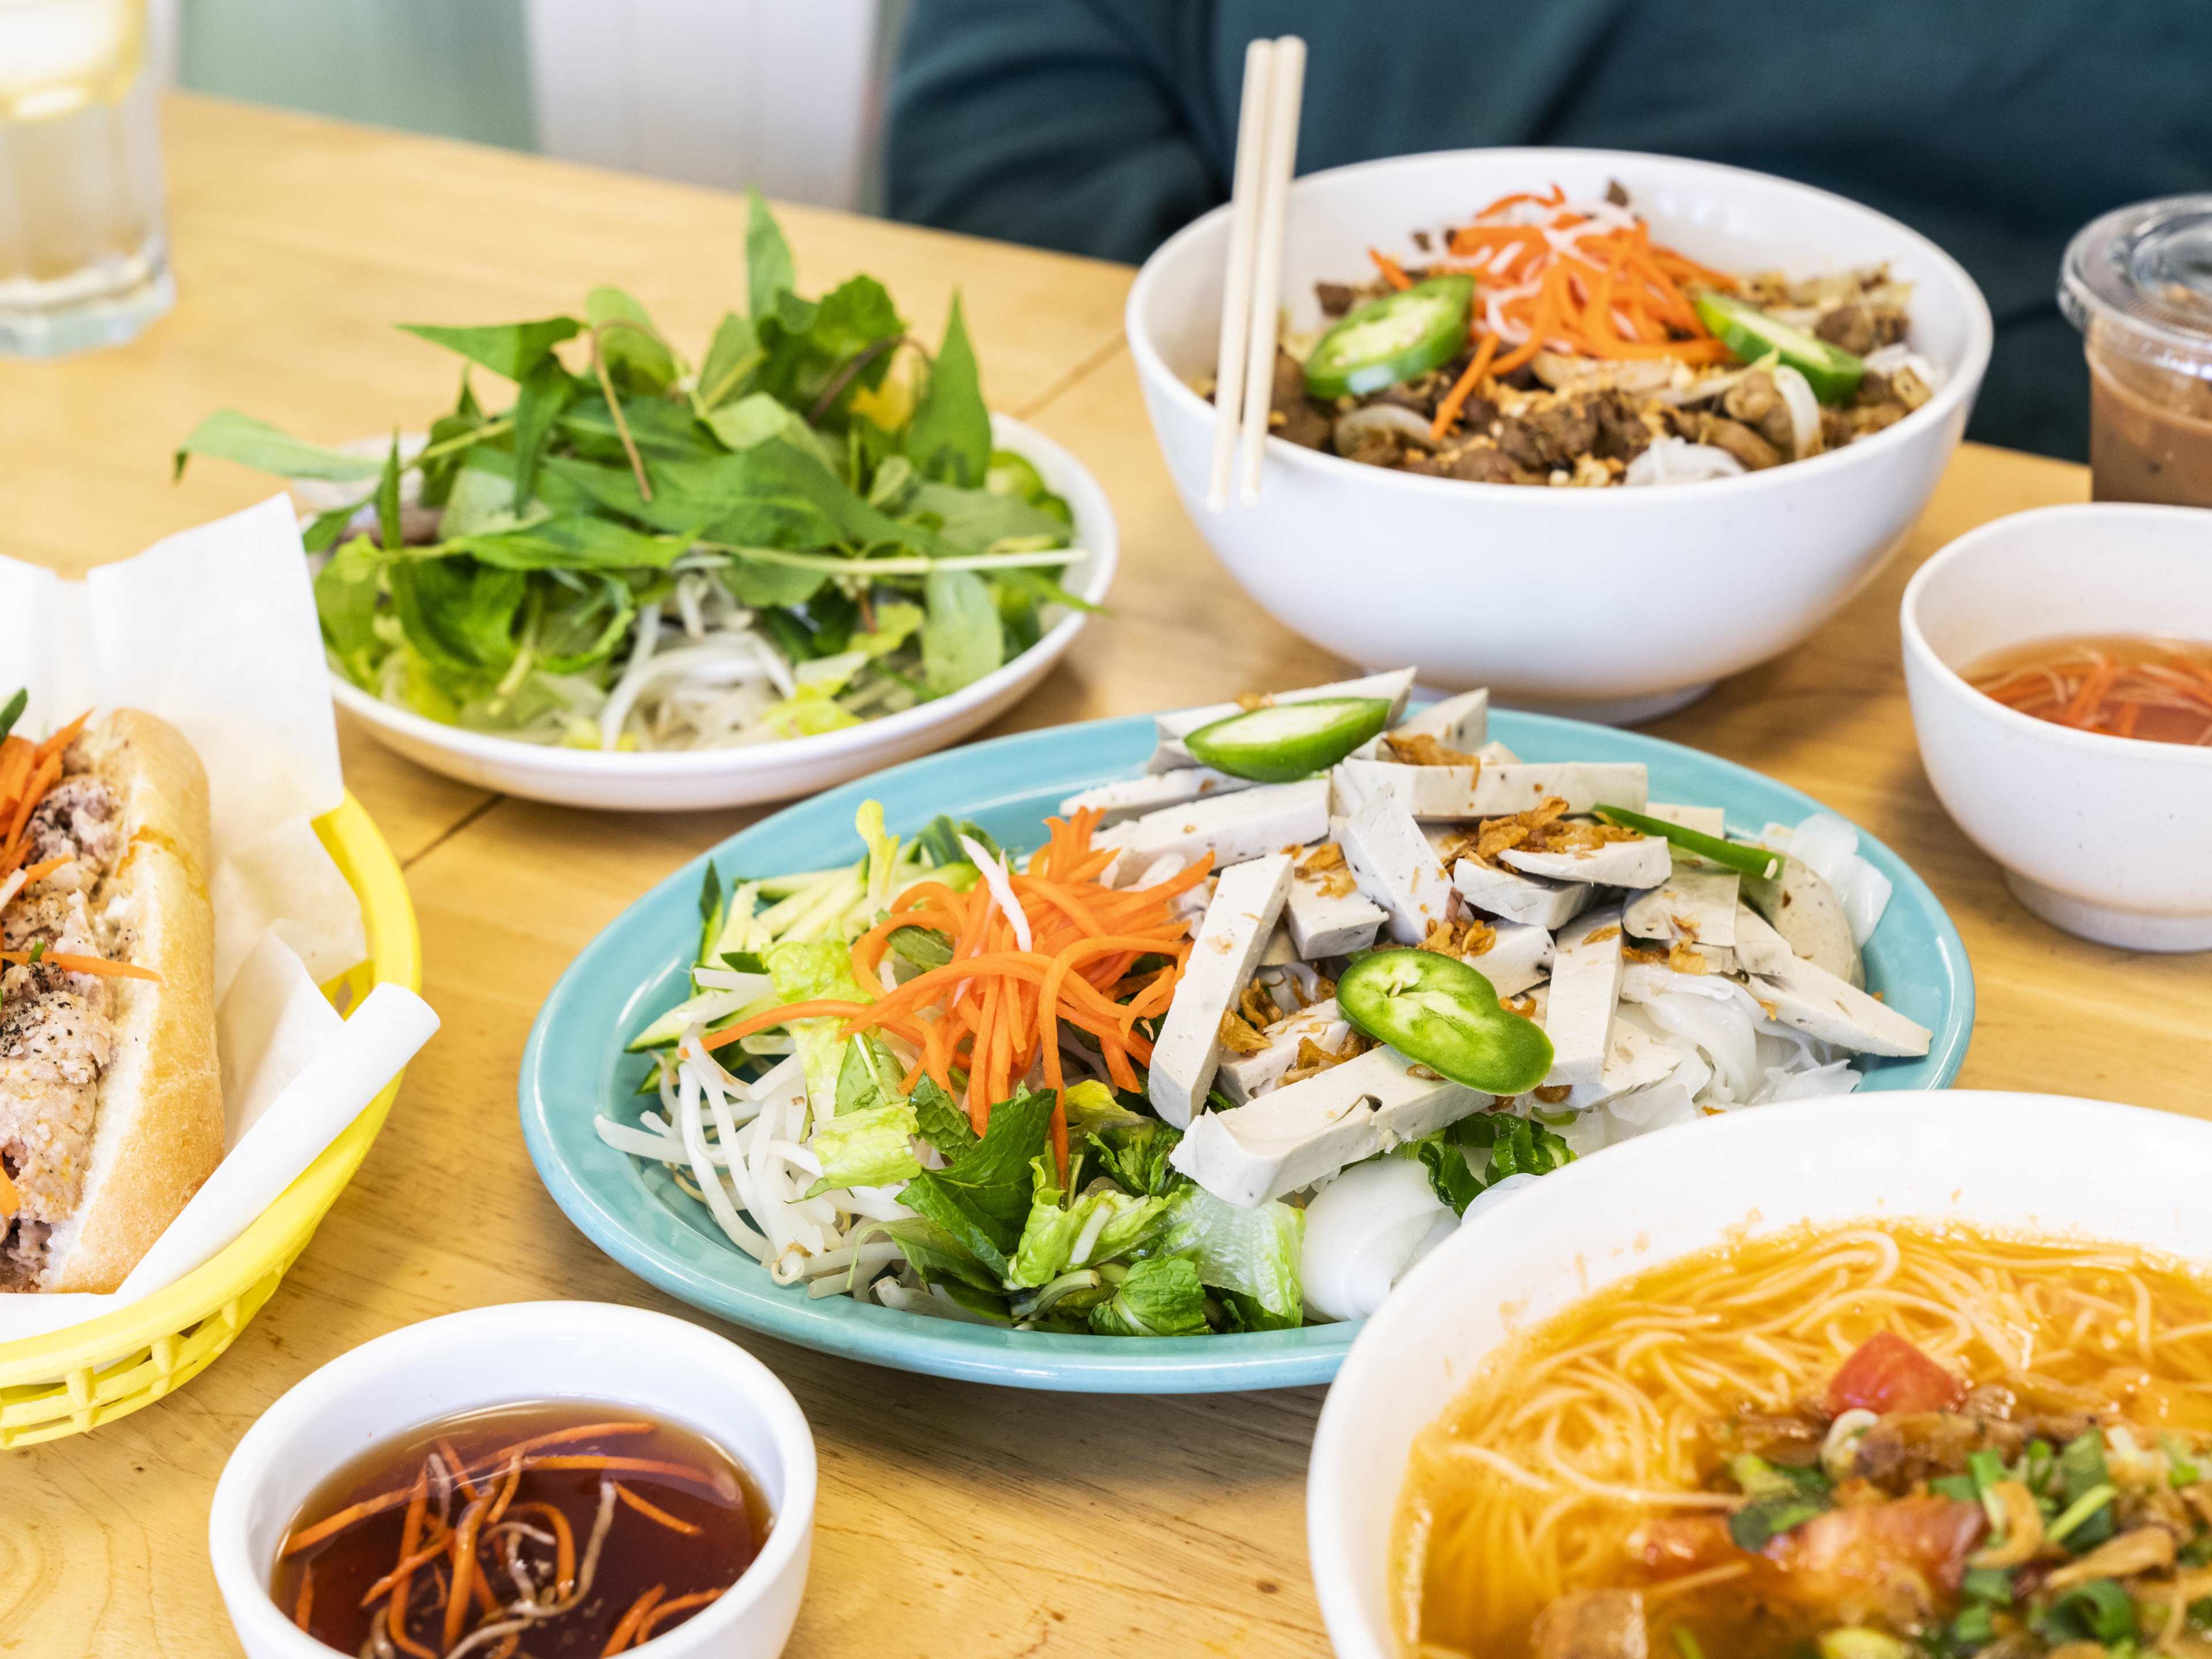 A spread of banh uot chay, bun rieu, bun, and more at Mong Thu